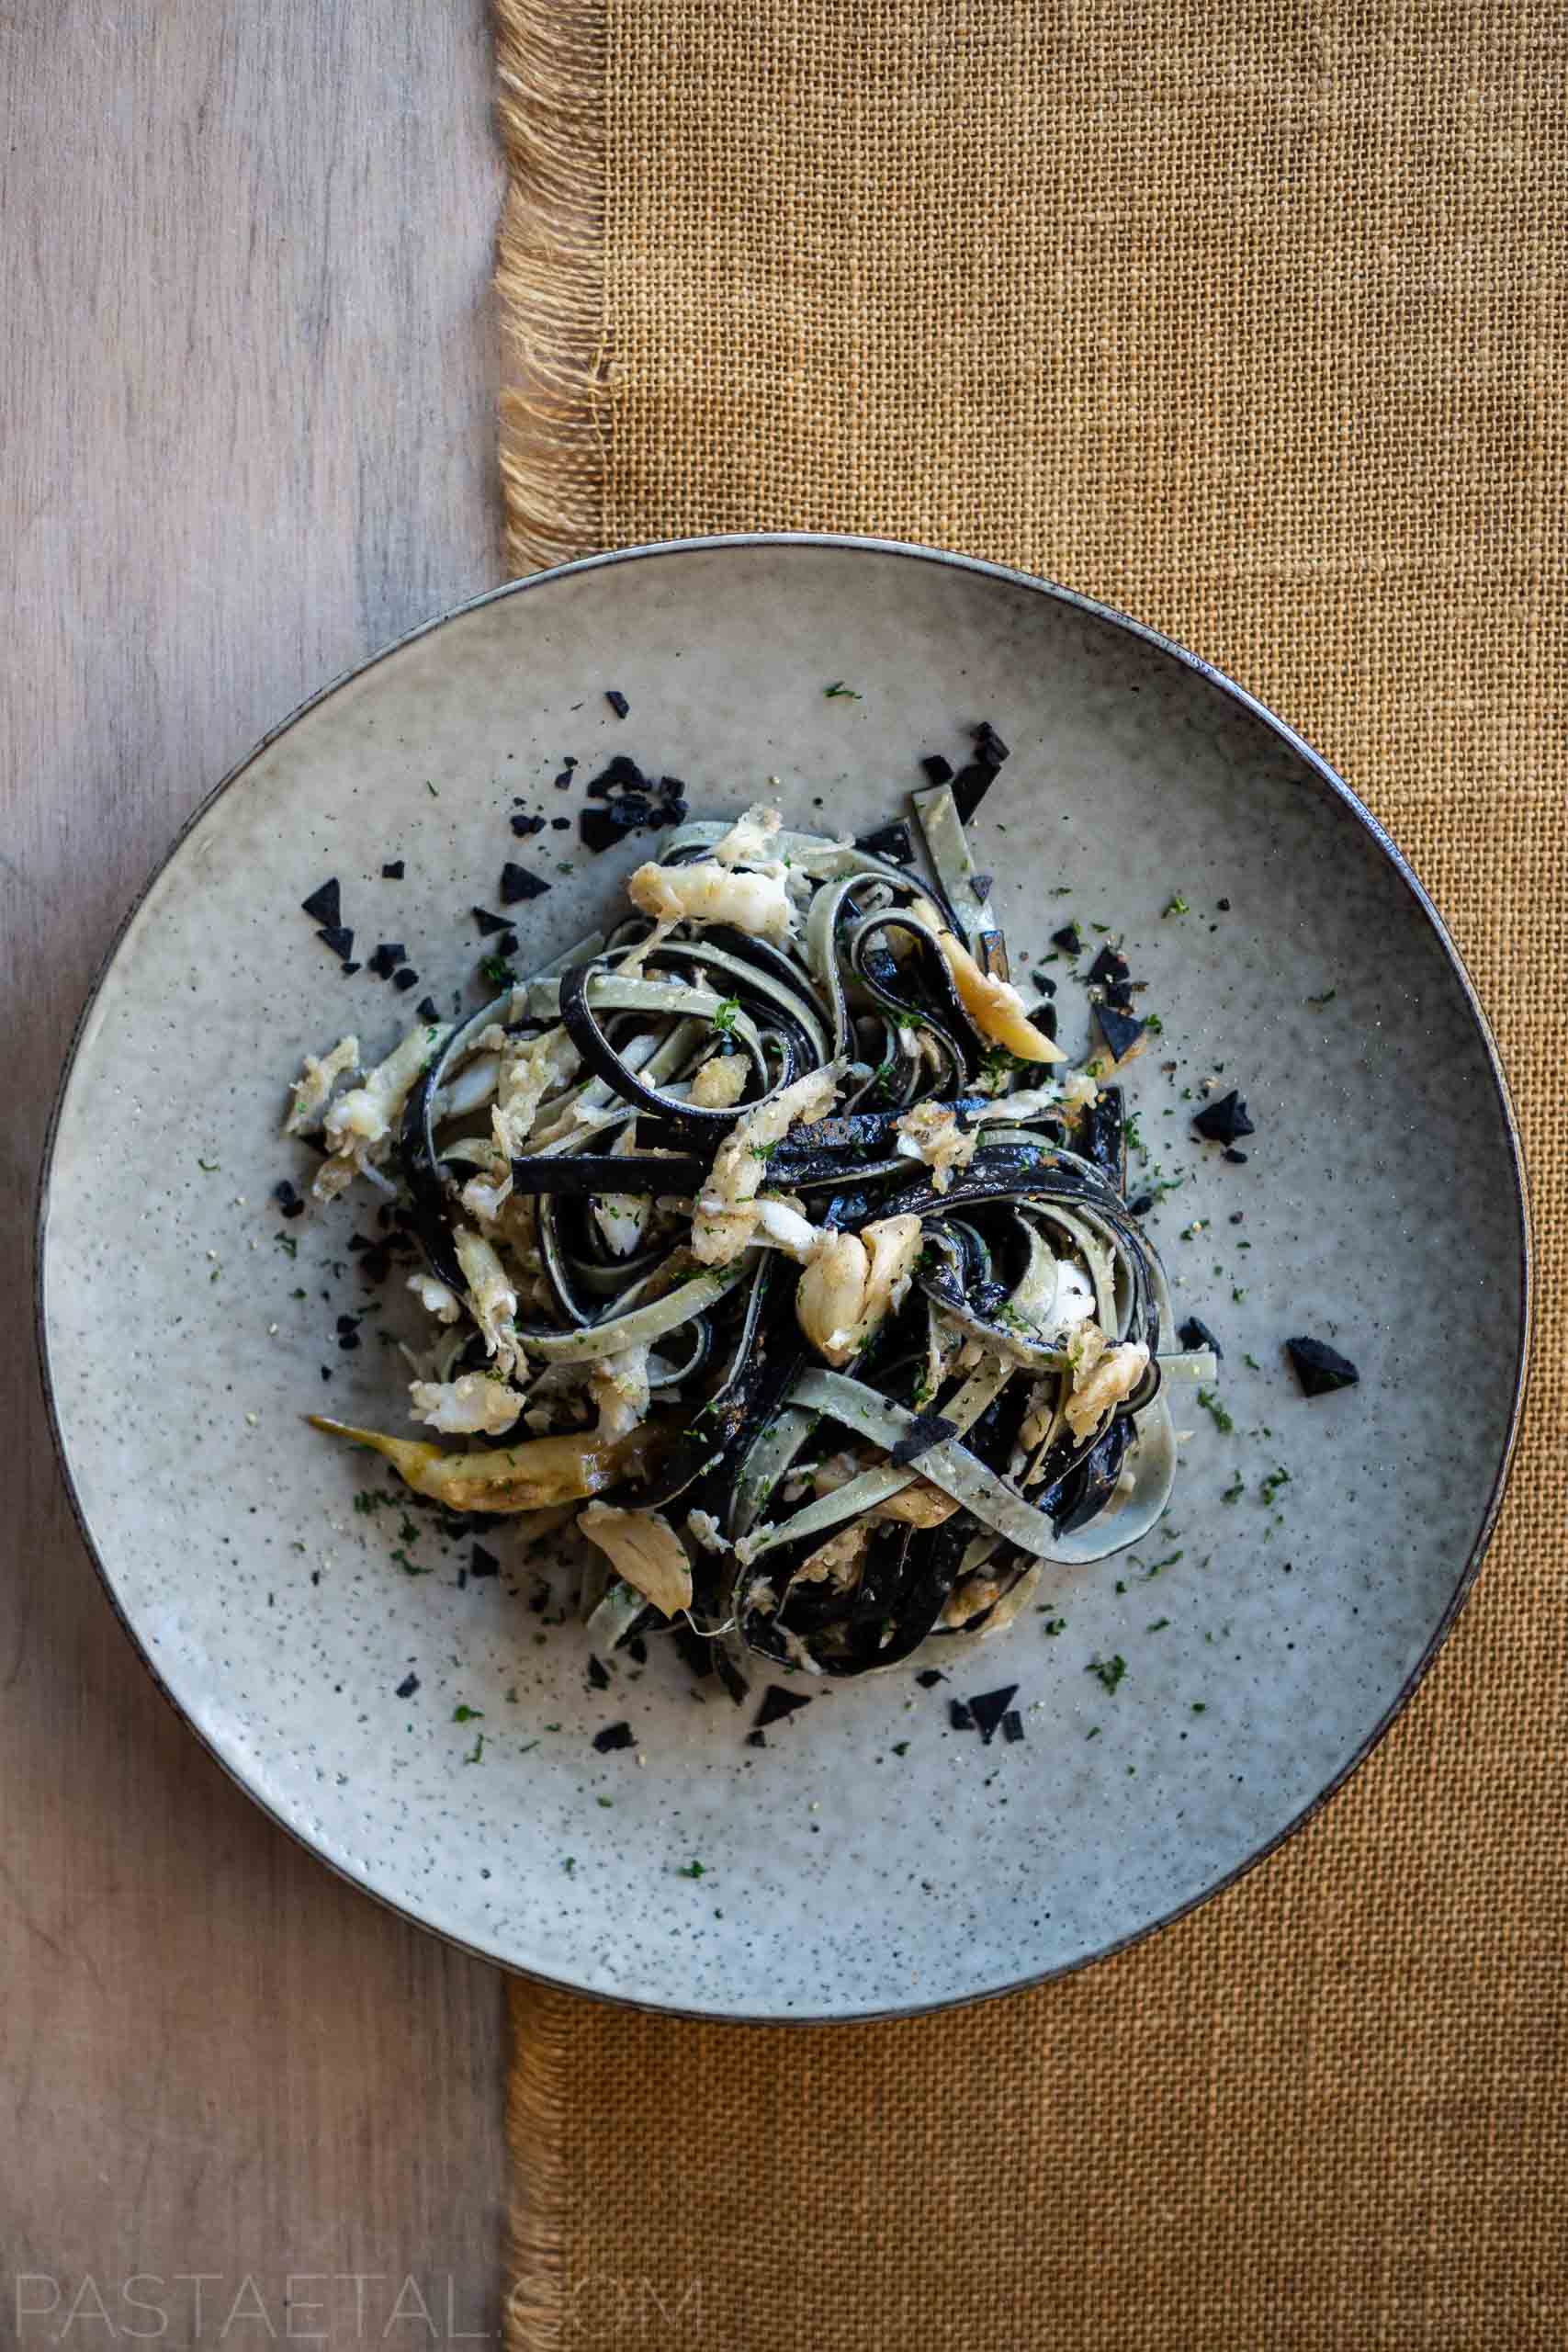 https://pastaetal.com/wp-content/uploads/2020/07/blog-main-pasta-et-al-plate-of-laminated-squid-ink-and-lemon-linguine-with-whitebait-and-black-sea-salt.jpg